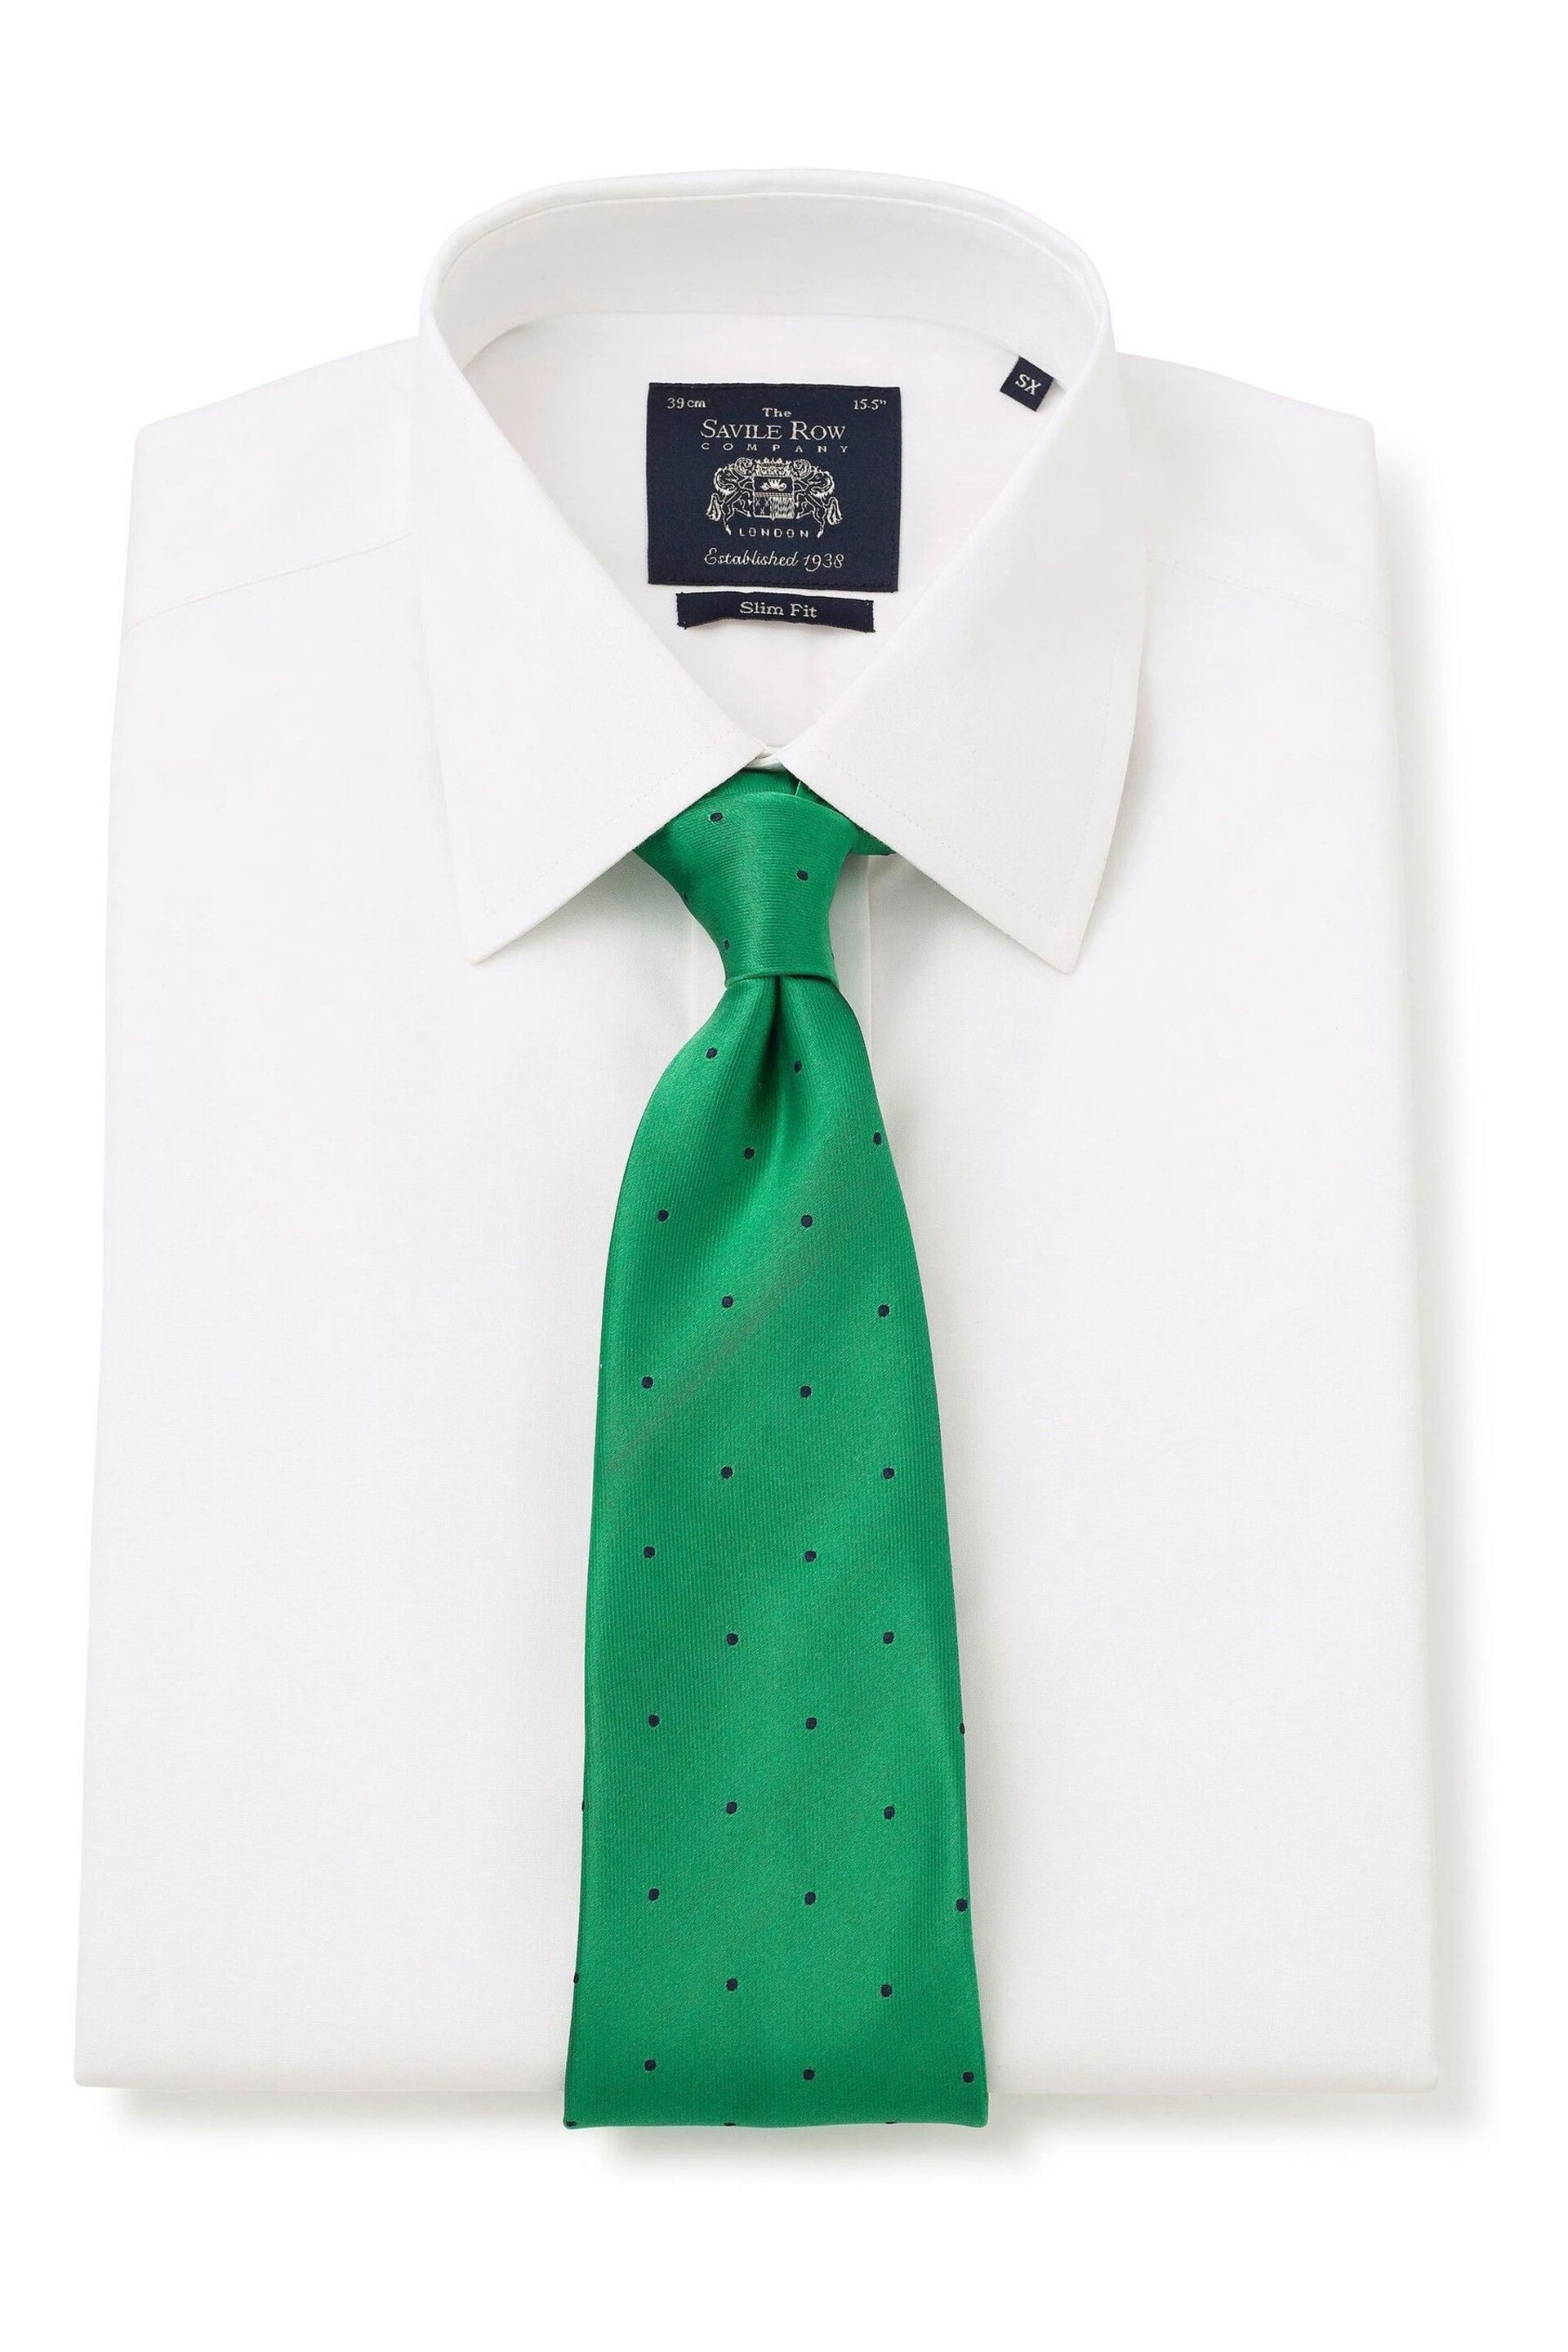 Savile Row White Poplin Slim Fit NonIron Double Cuff Shirt - Image 1 of 4